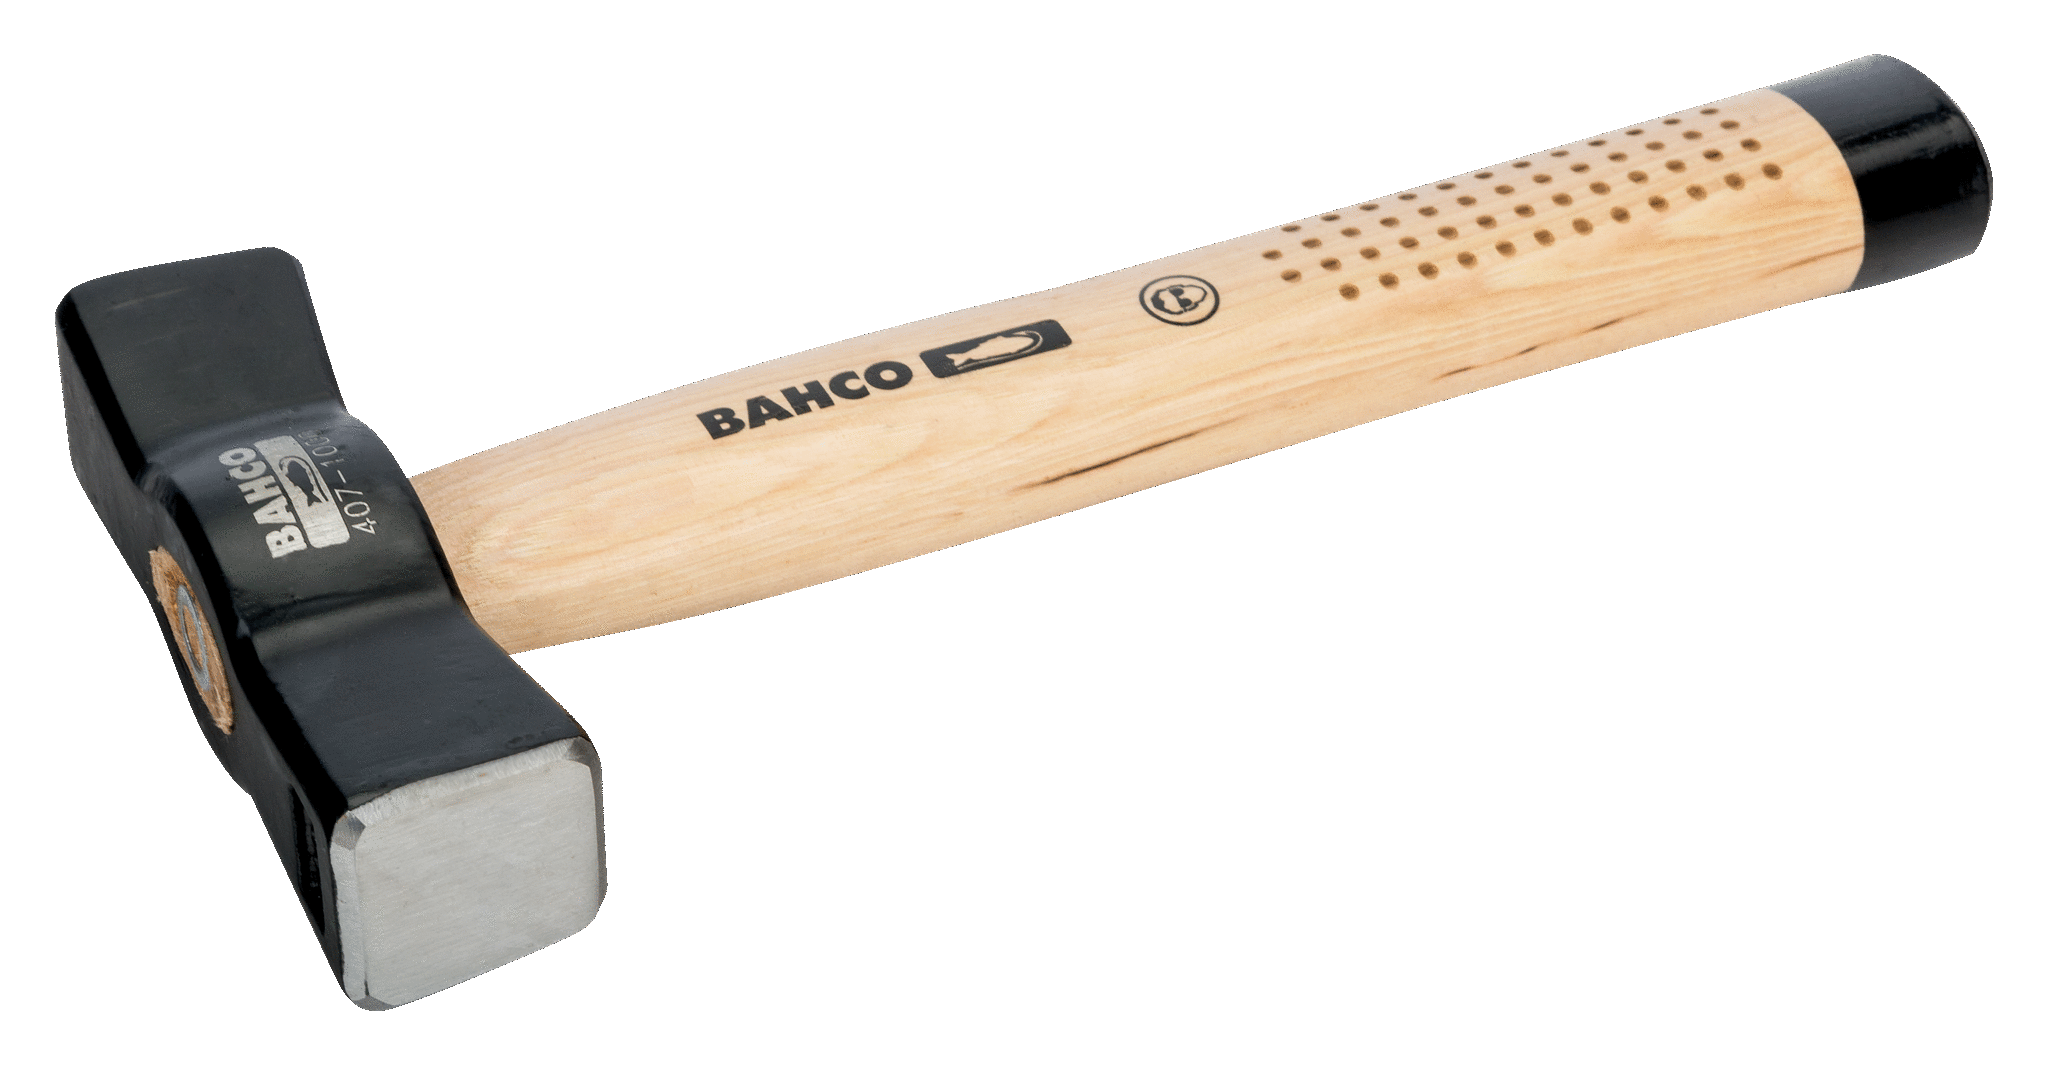 Кувалда с заостренным бойком, деревянная рукоятка BAHCO 407